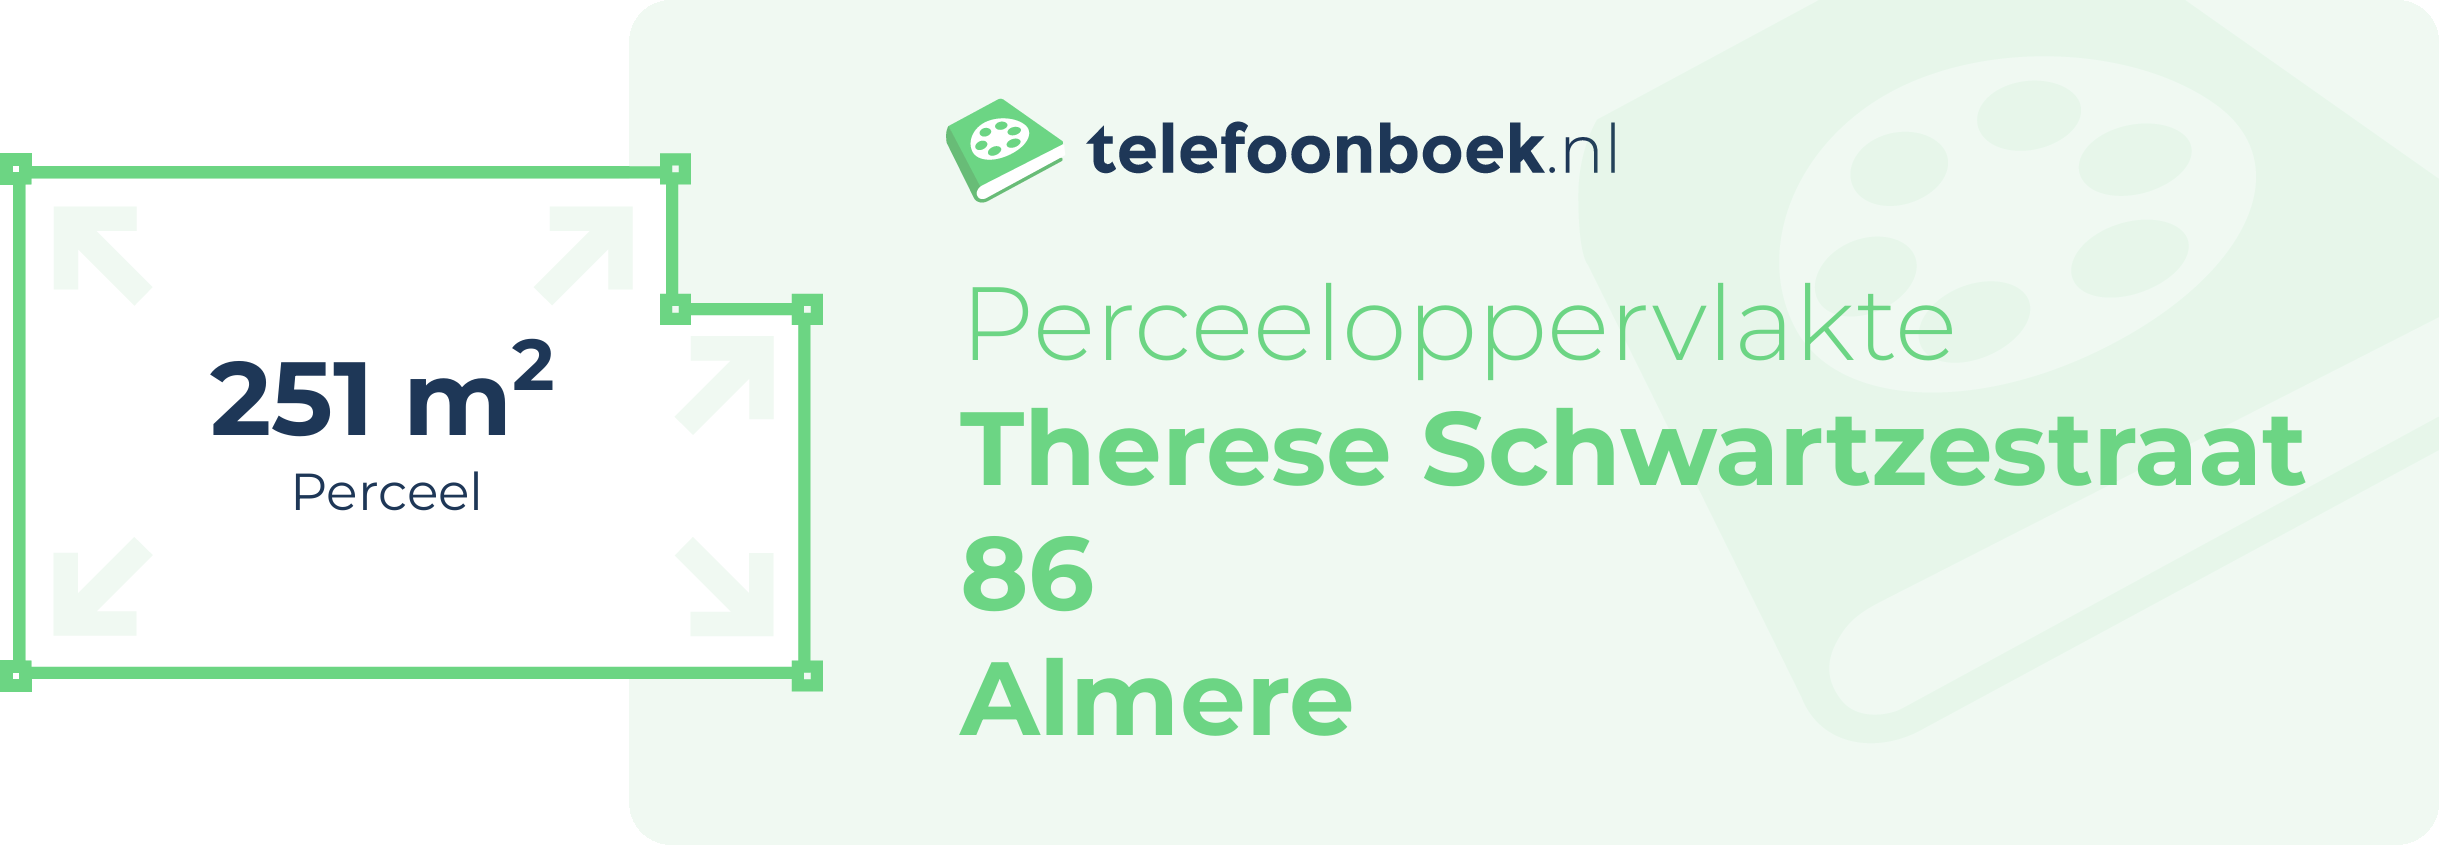 Perceeloppervlakte Therese Schwartzestraat 86 Almere